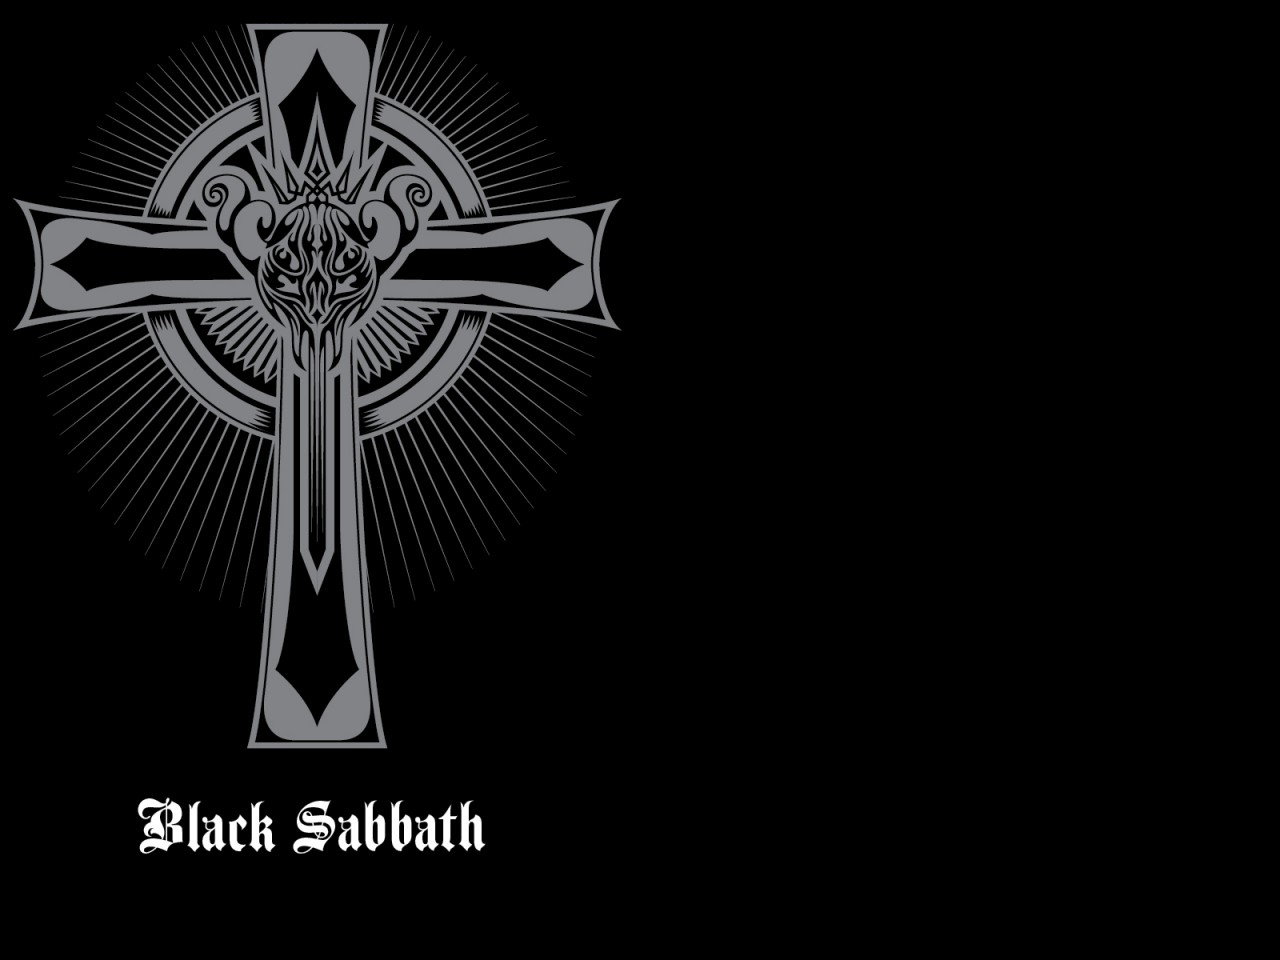 Black Sabbath Cross Desktop Wallpaper Uploaded By Sumitthorat111 - Black Sabbath The Rules Of Hell , HD Wallpaper & Backgrounds